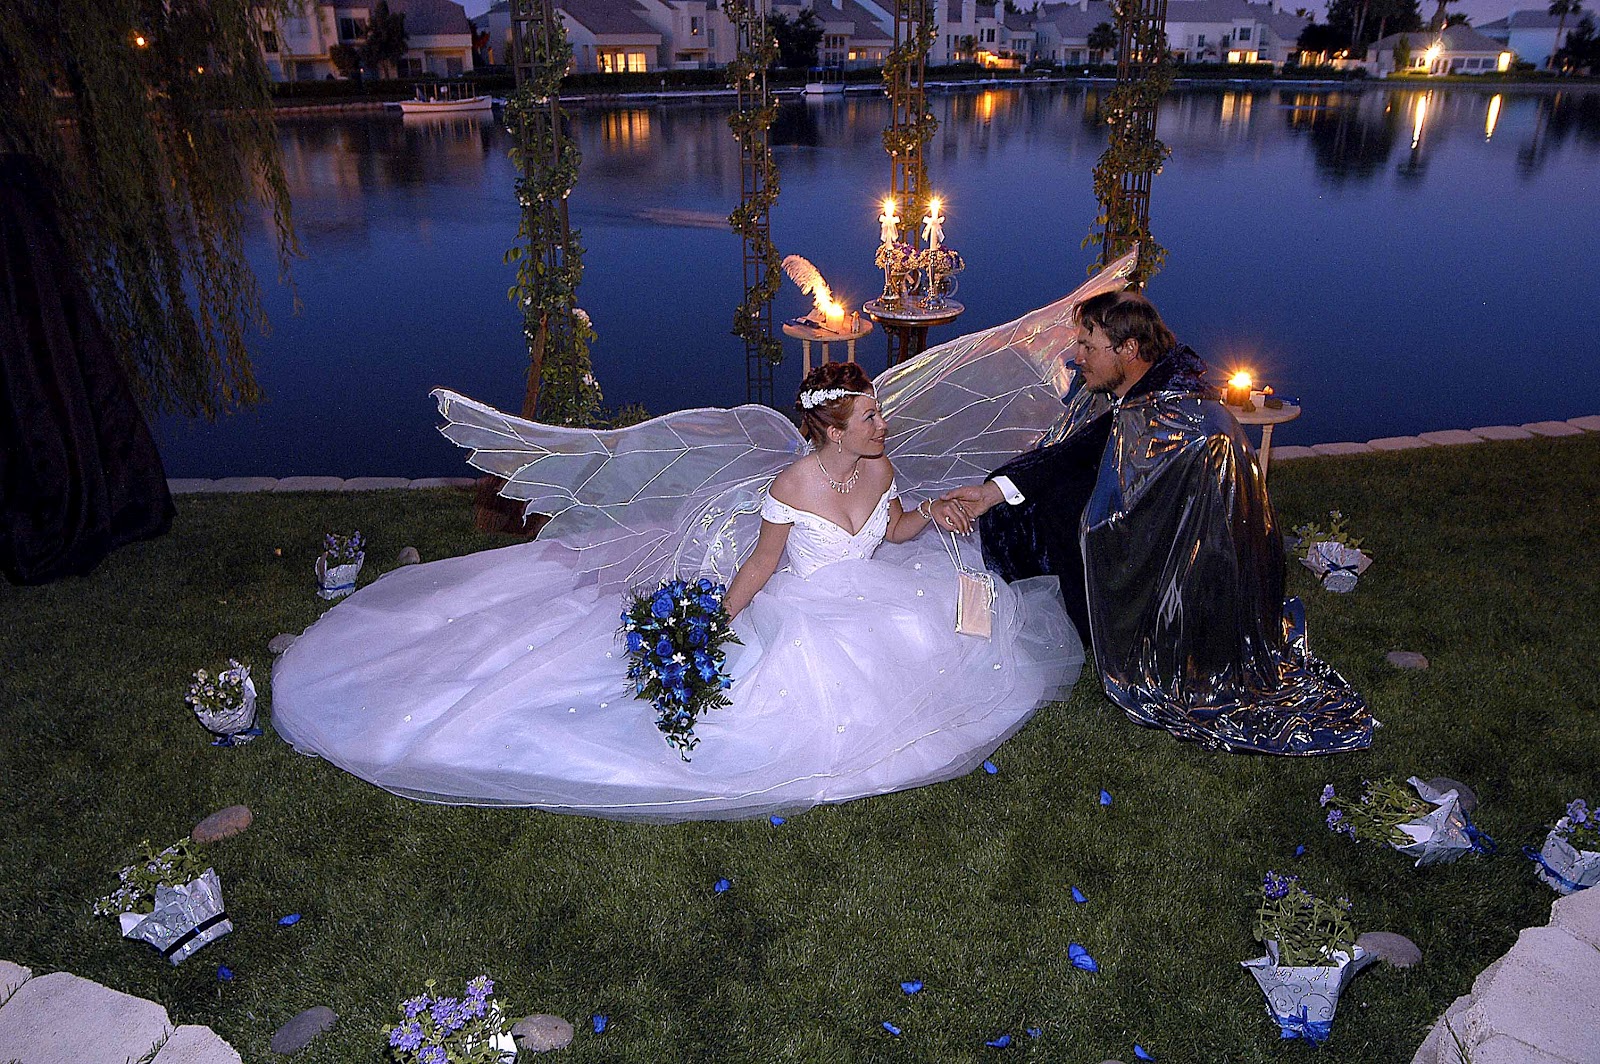 pinterest wedding dress discount: Fairy Wedding Dresses